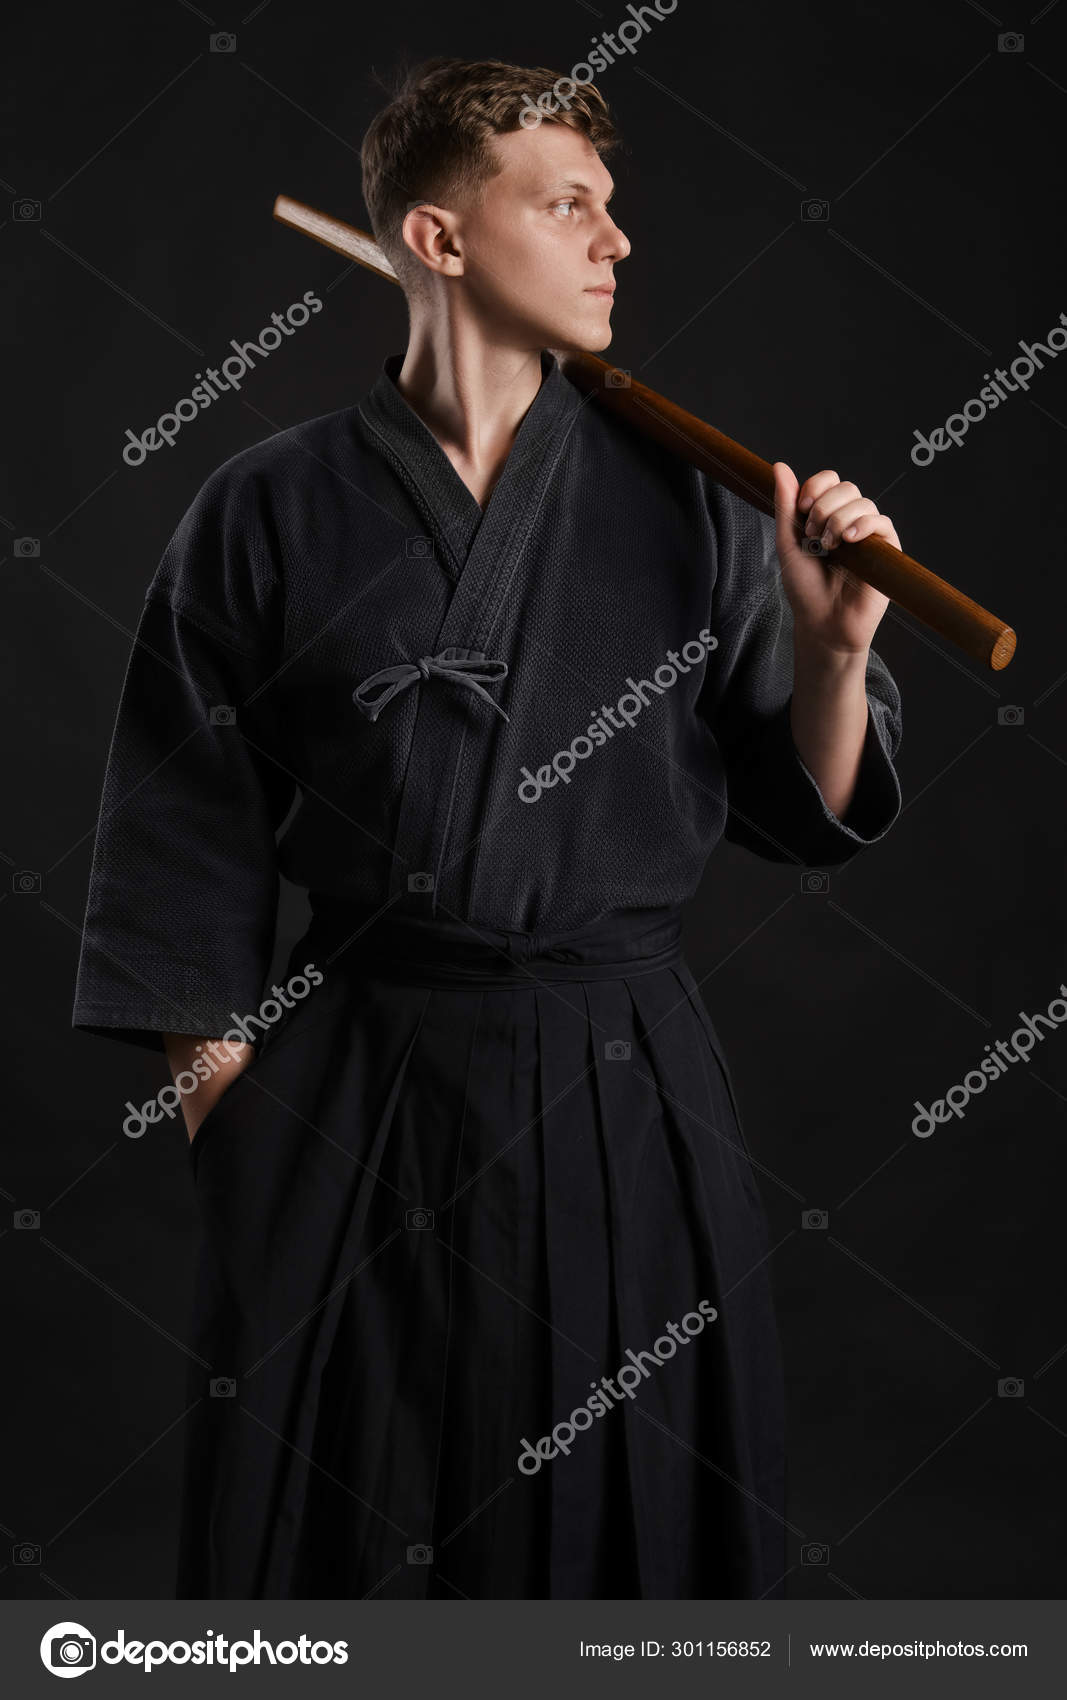 Kendo guru usando un kimono tradicional japonés está practicando el arte  marcial con la espada de bambú shinai sobre un fondo de estudio negro..:  fotografía de stock © nazarov.dnepr@gmail.com #301156852 | Depositphotos